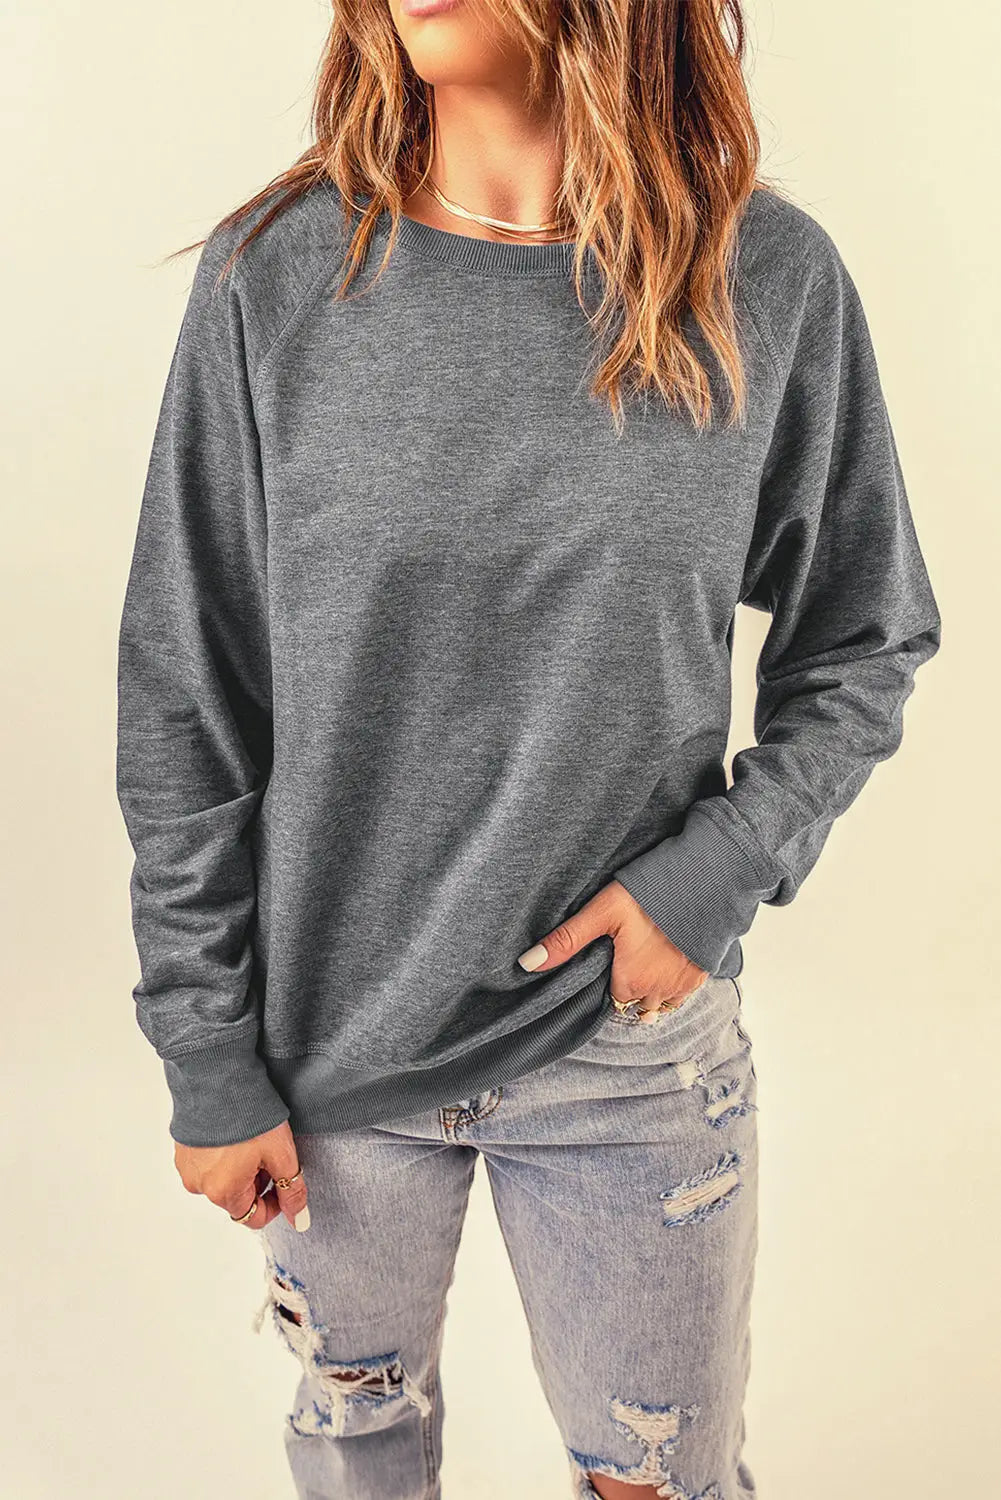 Pink pumpkin spice reglan sleeve sweatshirt - gray / s / 62.7% polyester + 37.3% cotton - graphic sweatshirts